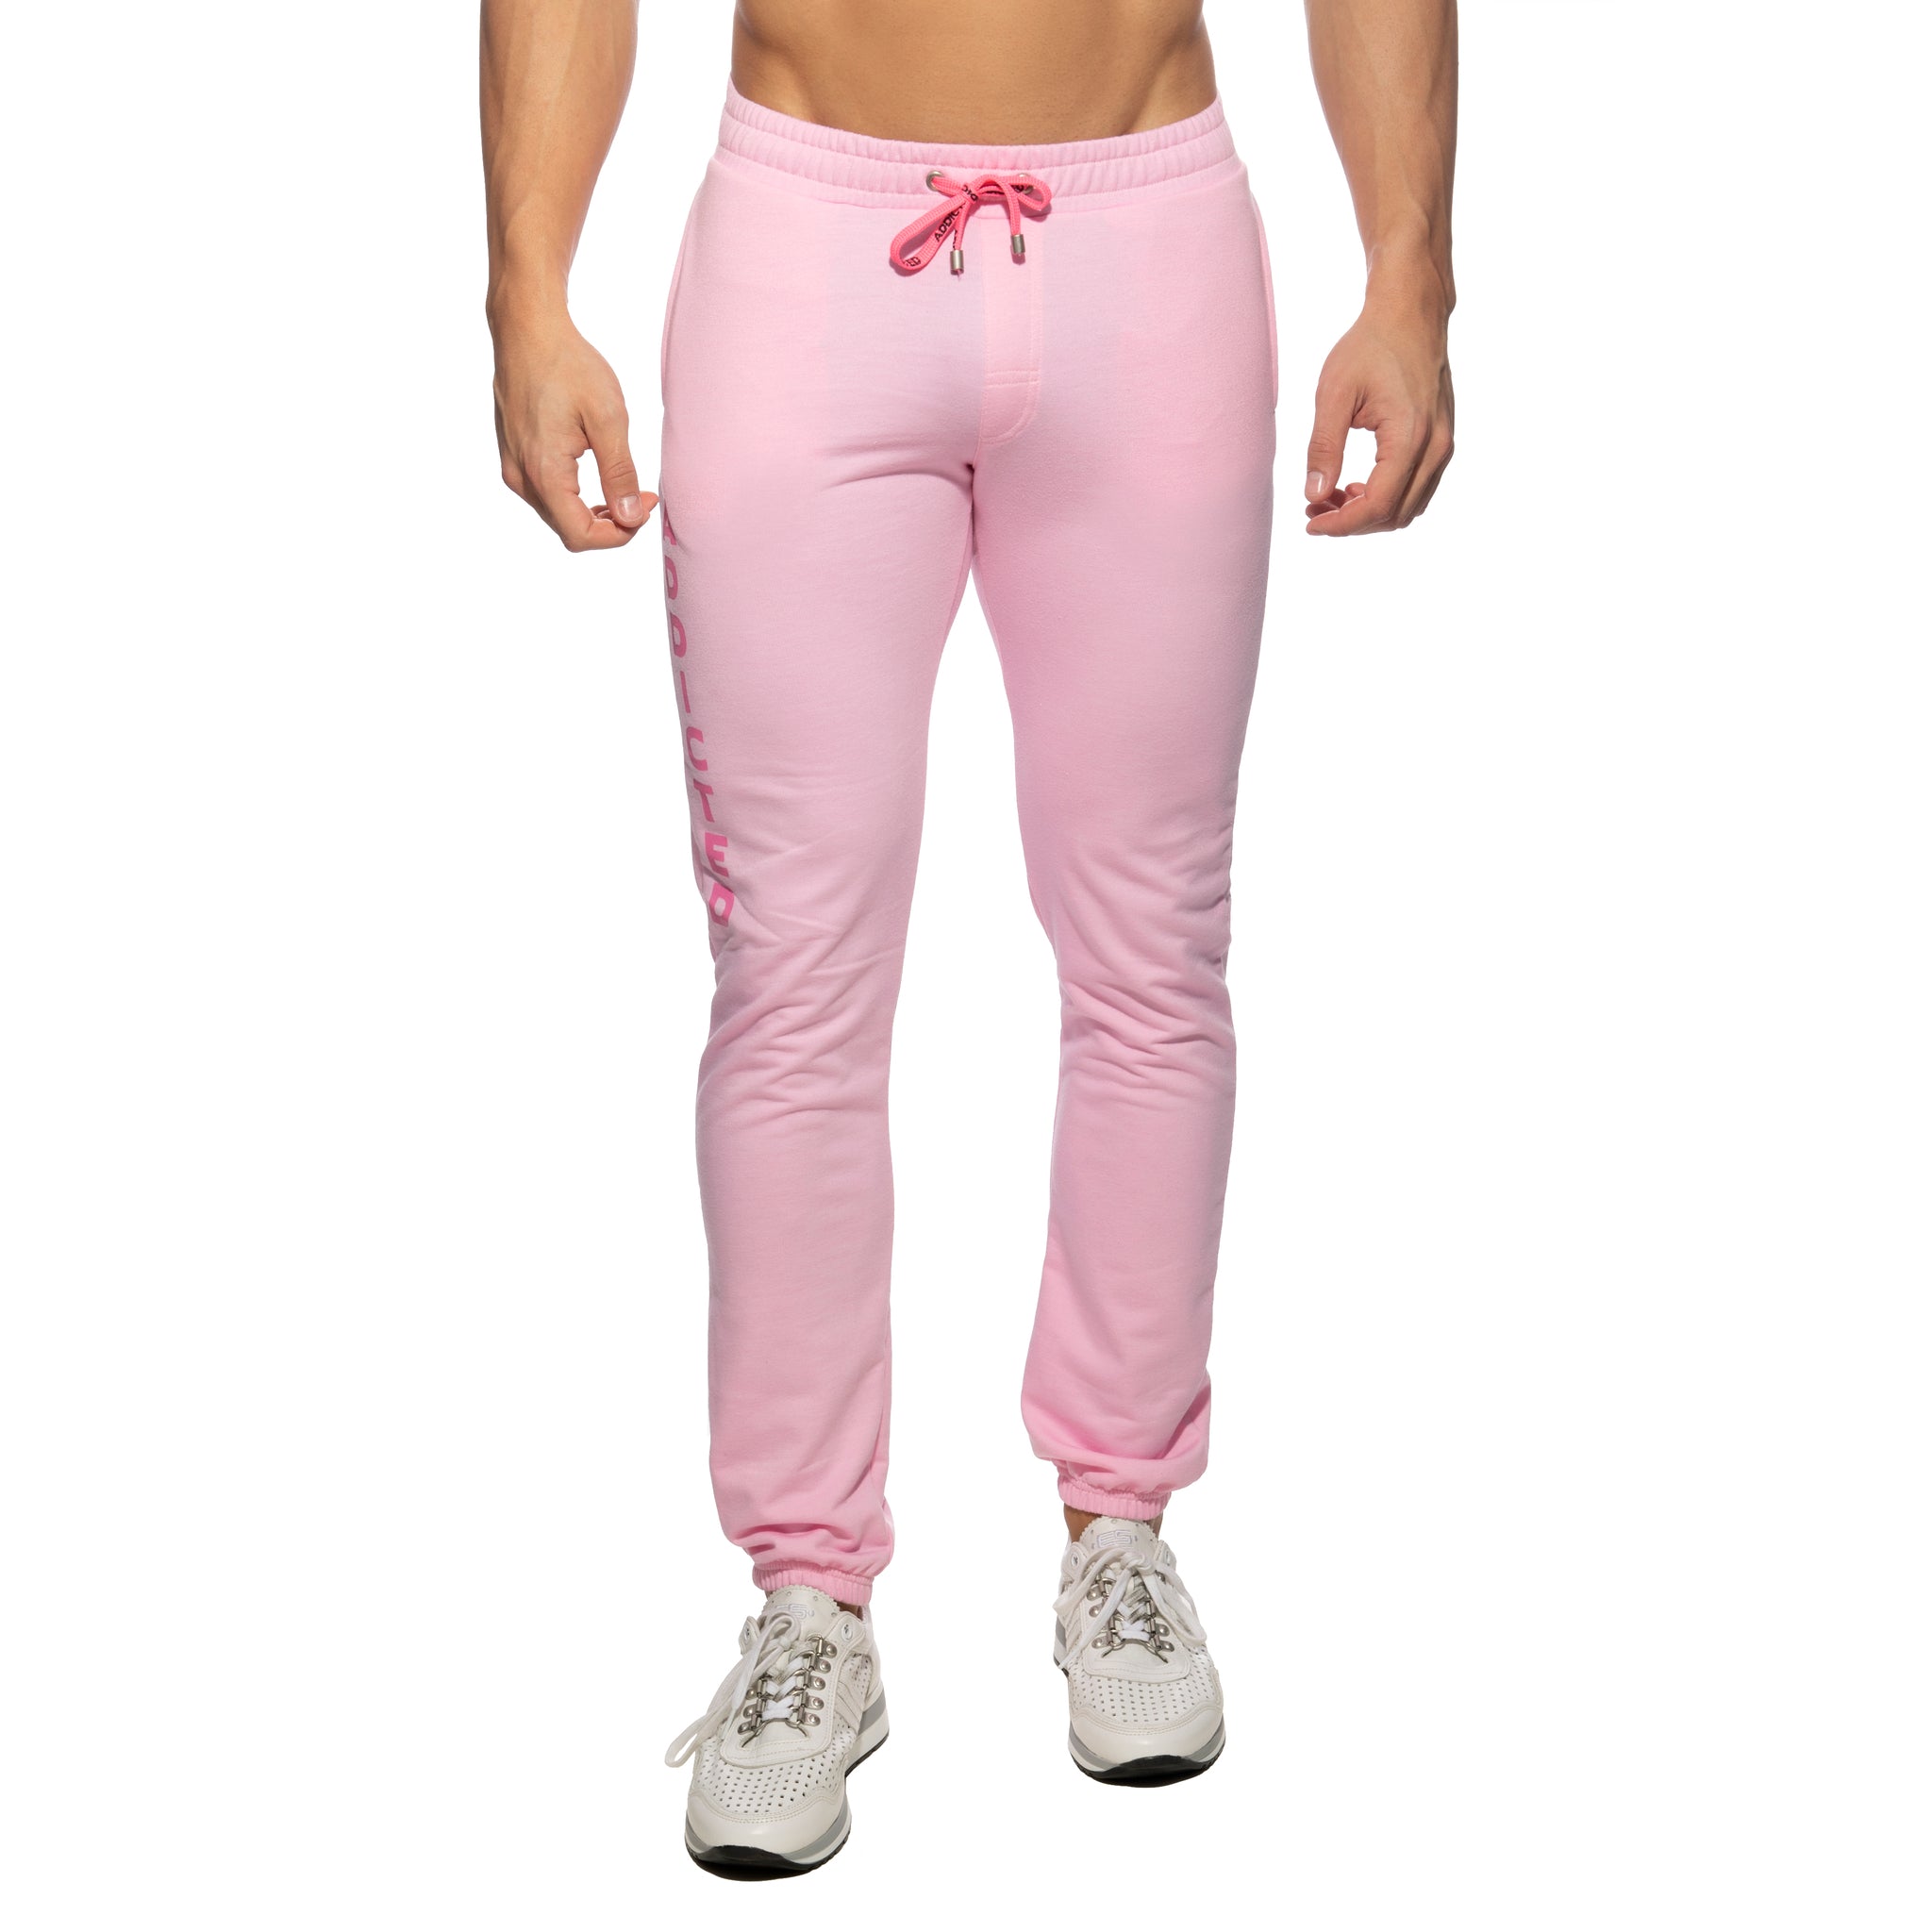 Addicted Long Jogging Pants Pink AD999